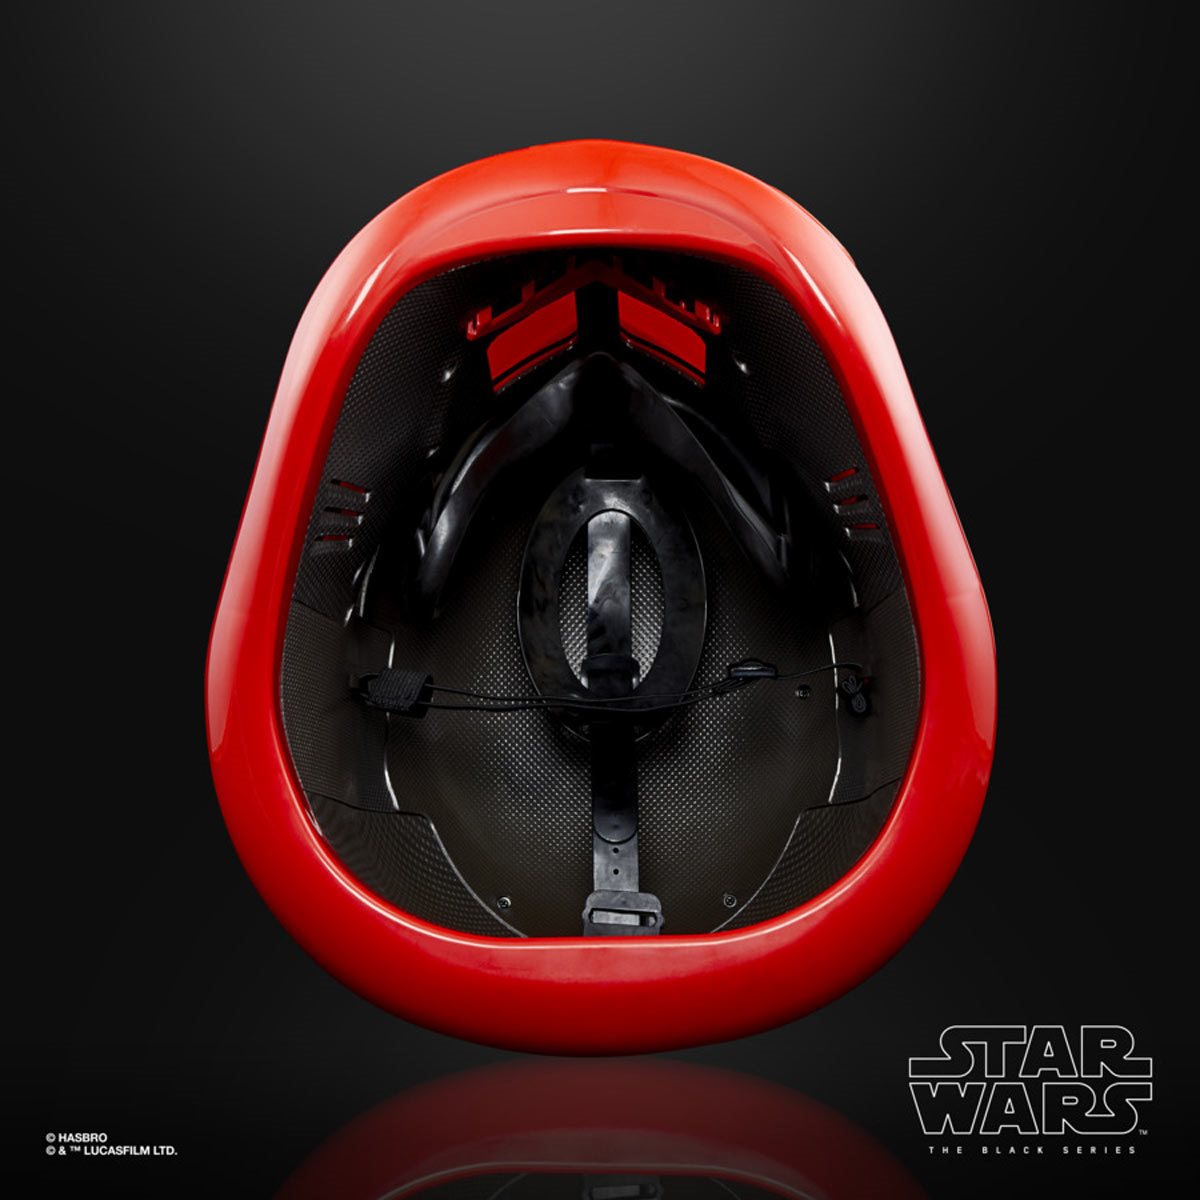 Star Wars: The Black Series - Galaxy's Edge Captain Cardinal Electronic Helmet Prop Replica